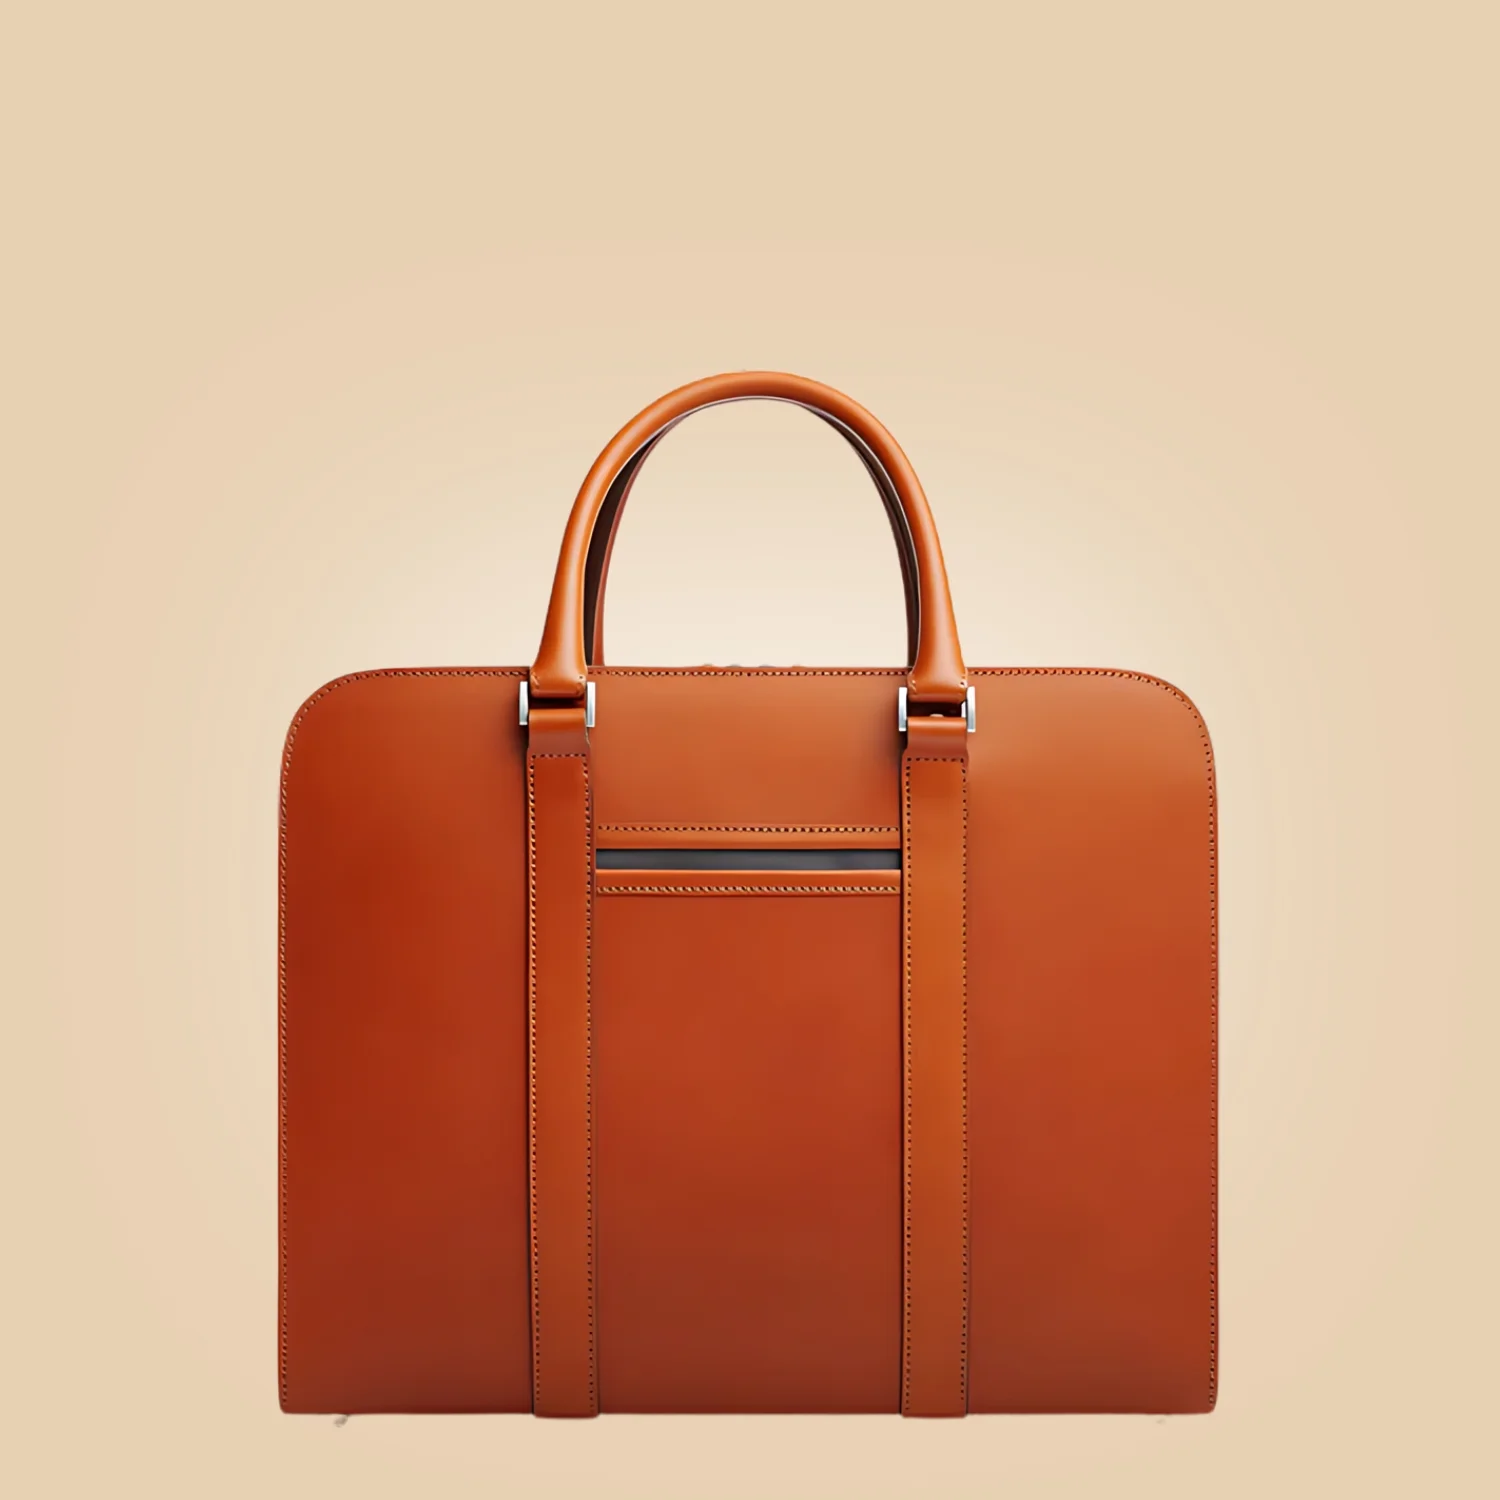 Carl Friedrik Palissy Tan Leather Double-Zipper Laptop Briefcase Bag